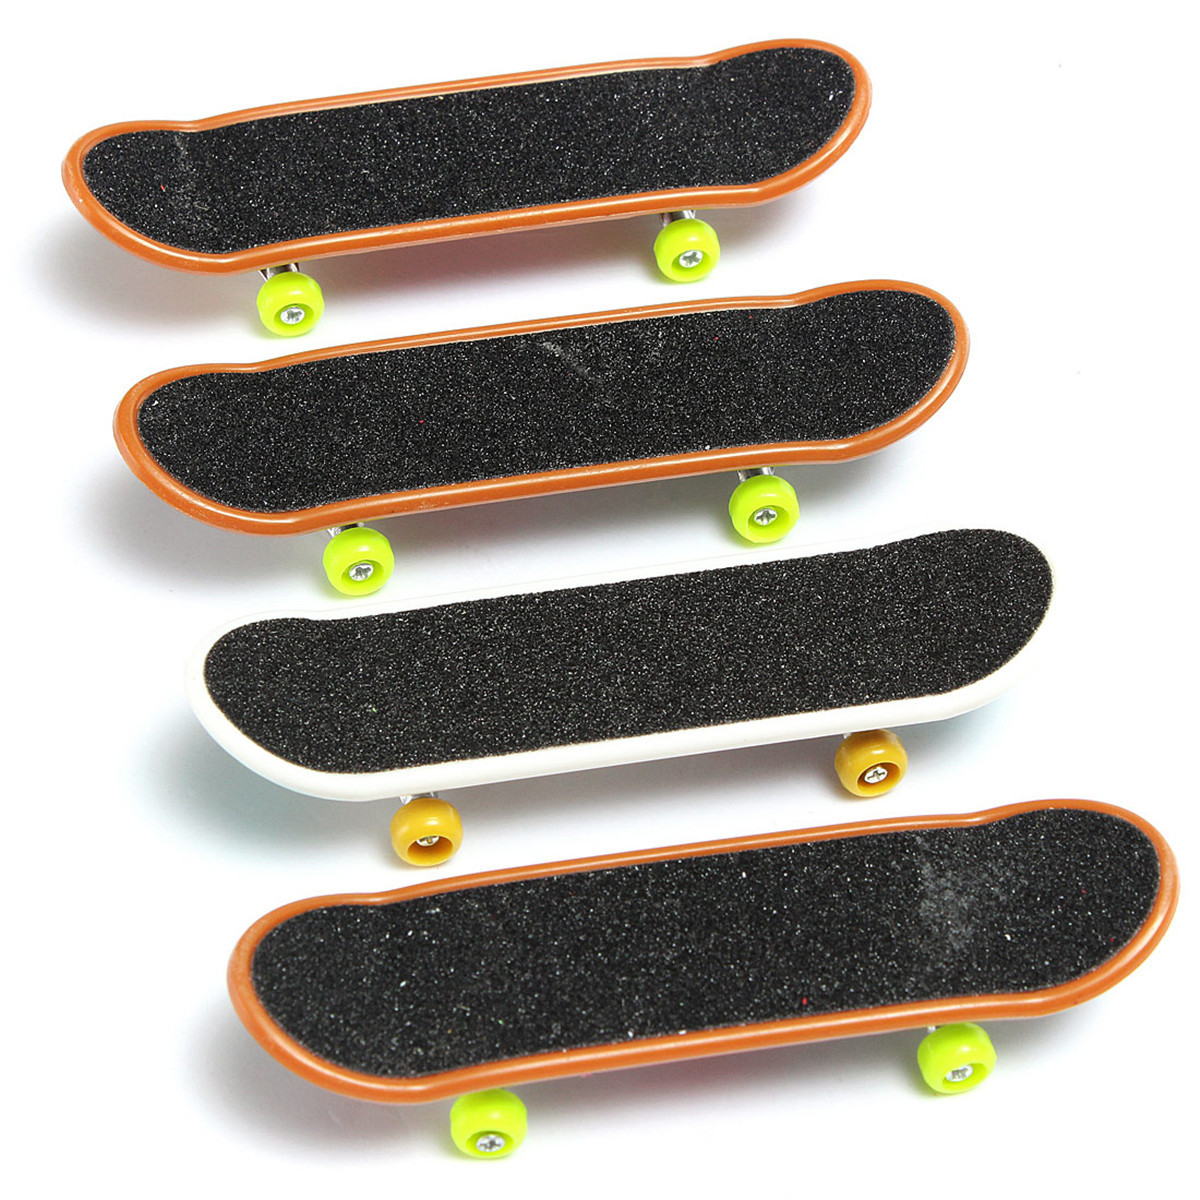 2X Mini Finger Board Skateboard Novelty Kids Boys Girls Toy Gift for Party